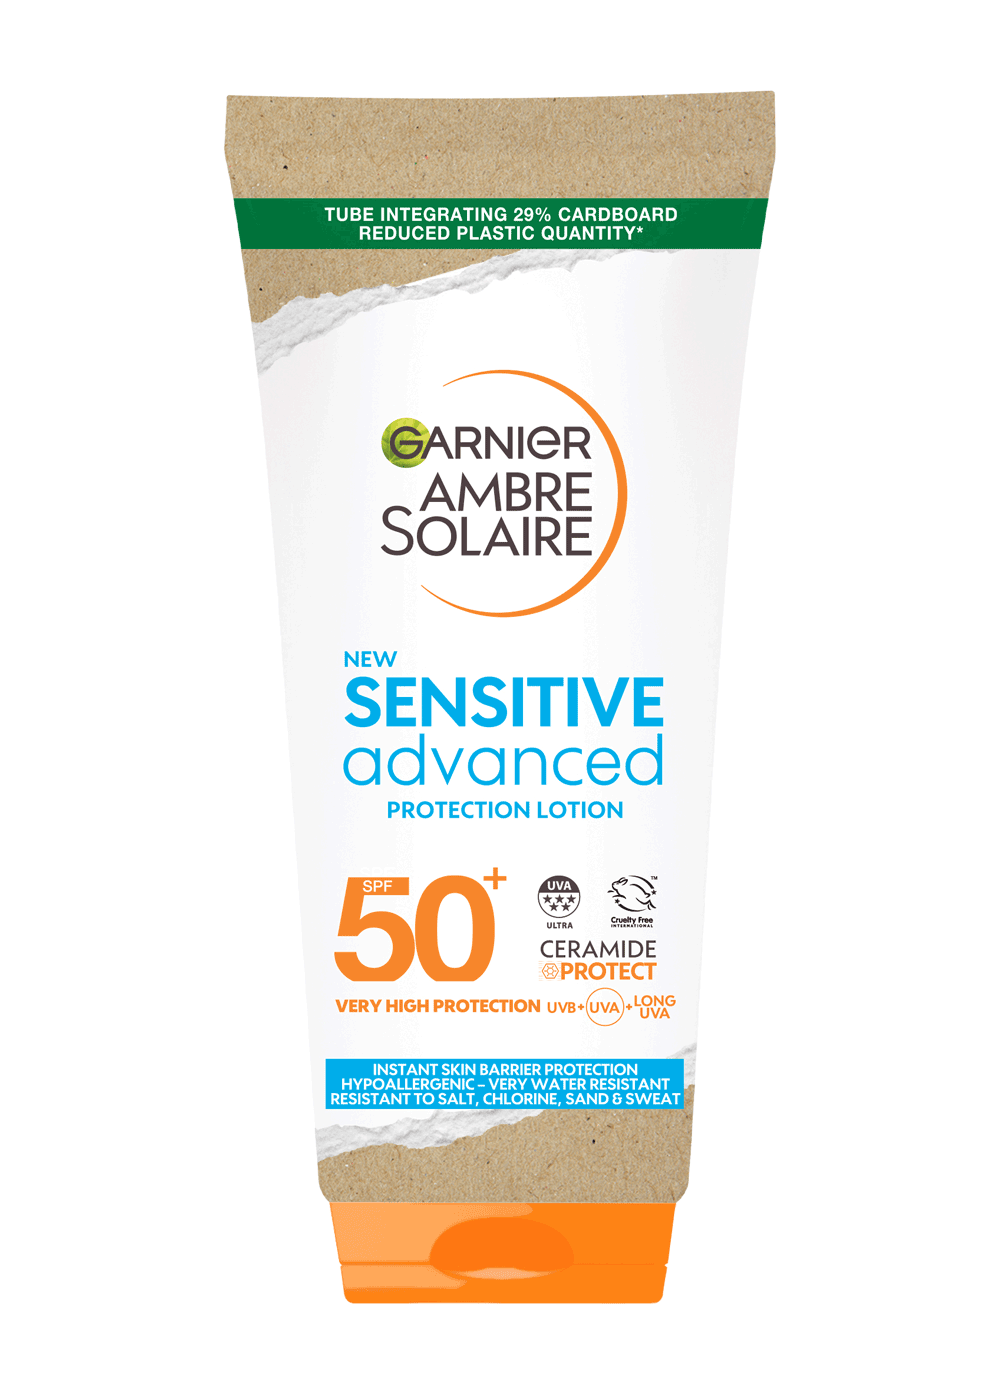 Crème solaire Bébé Sensi Advanced SPF50+ | GARNIER | SAGA Cosmetics